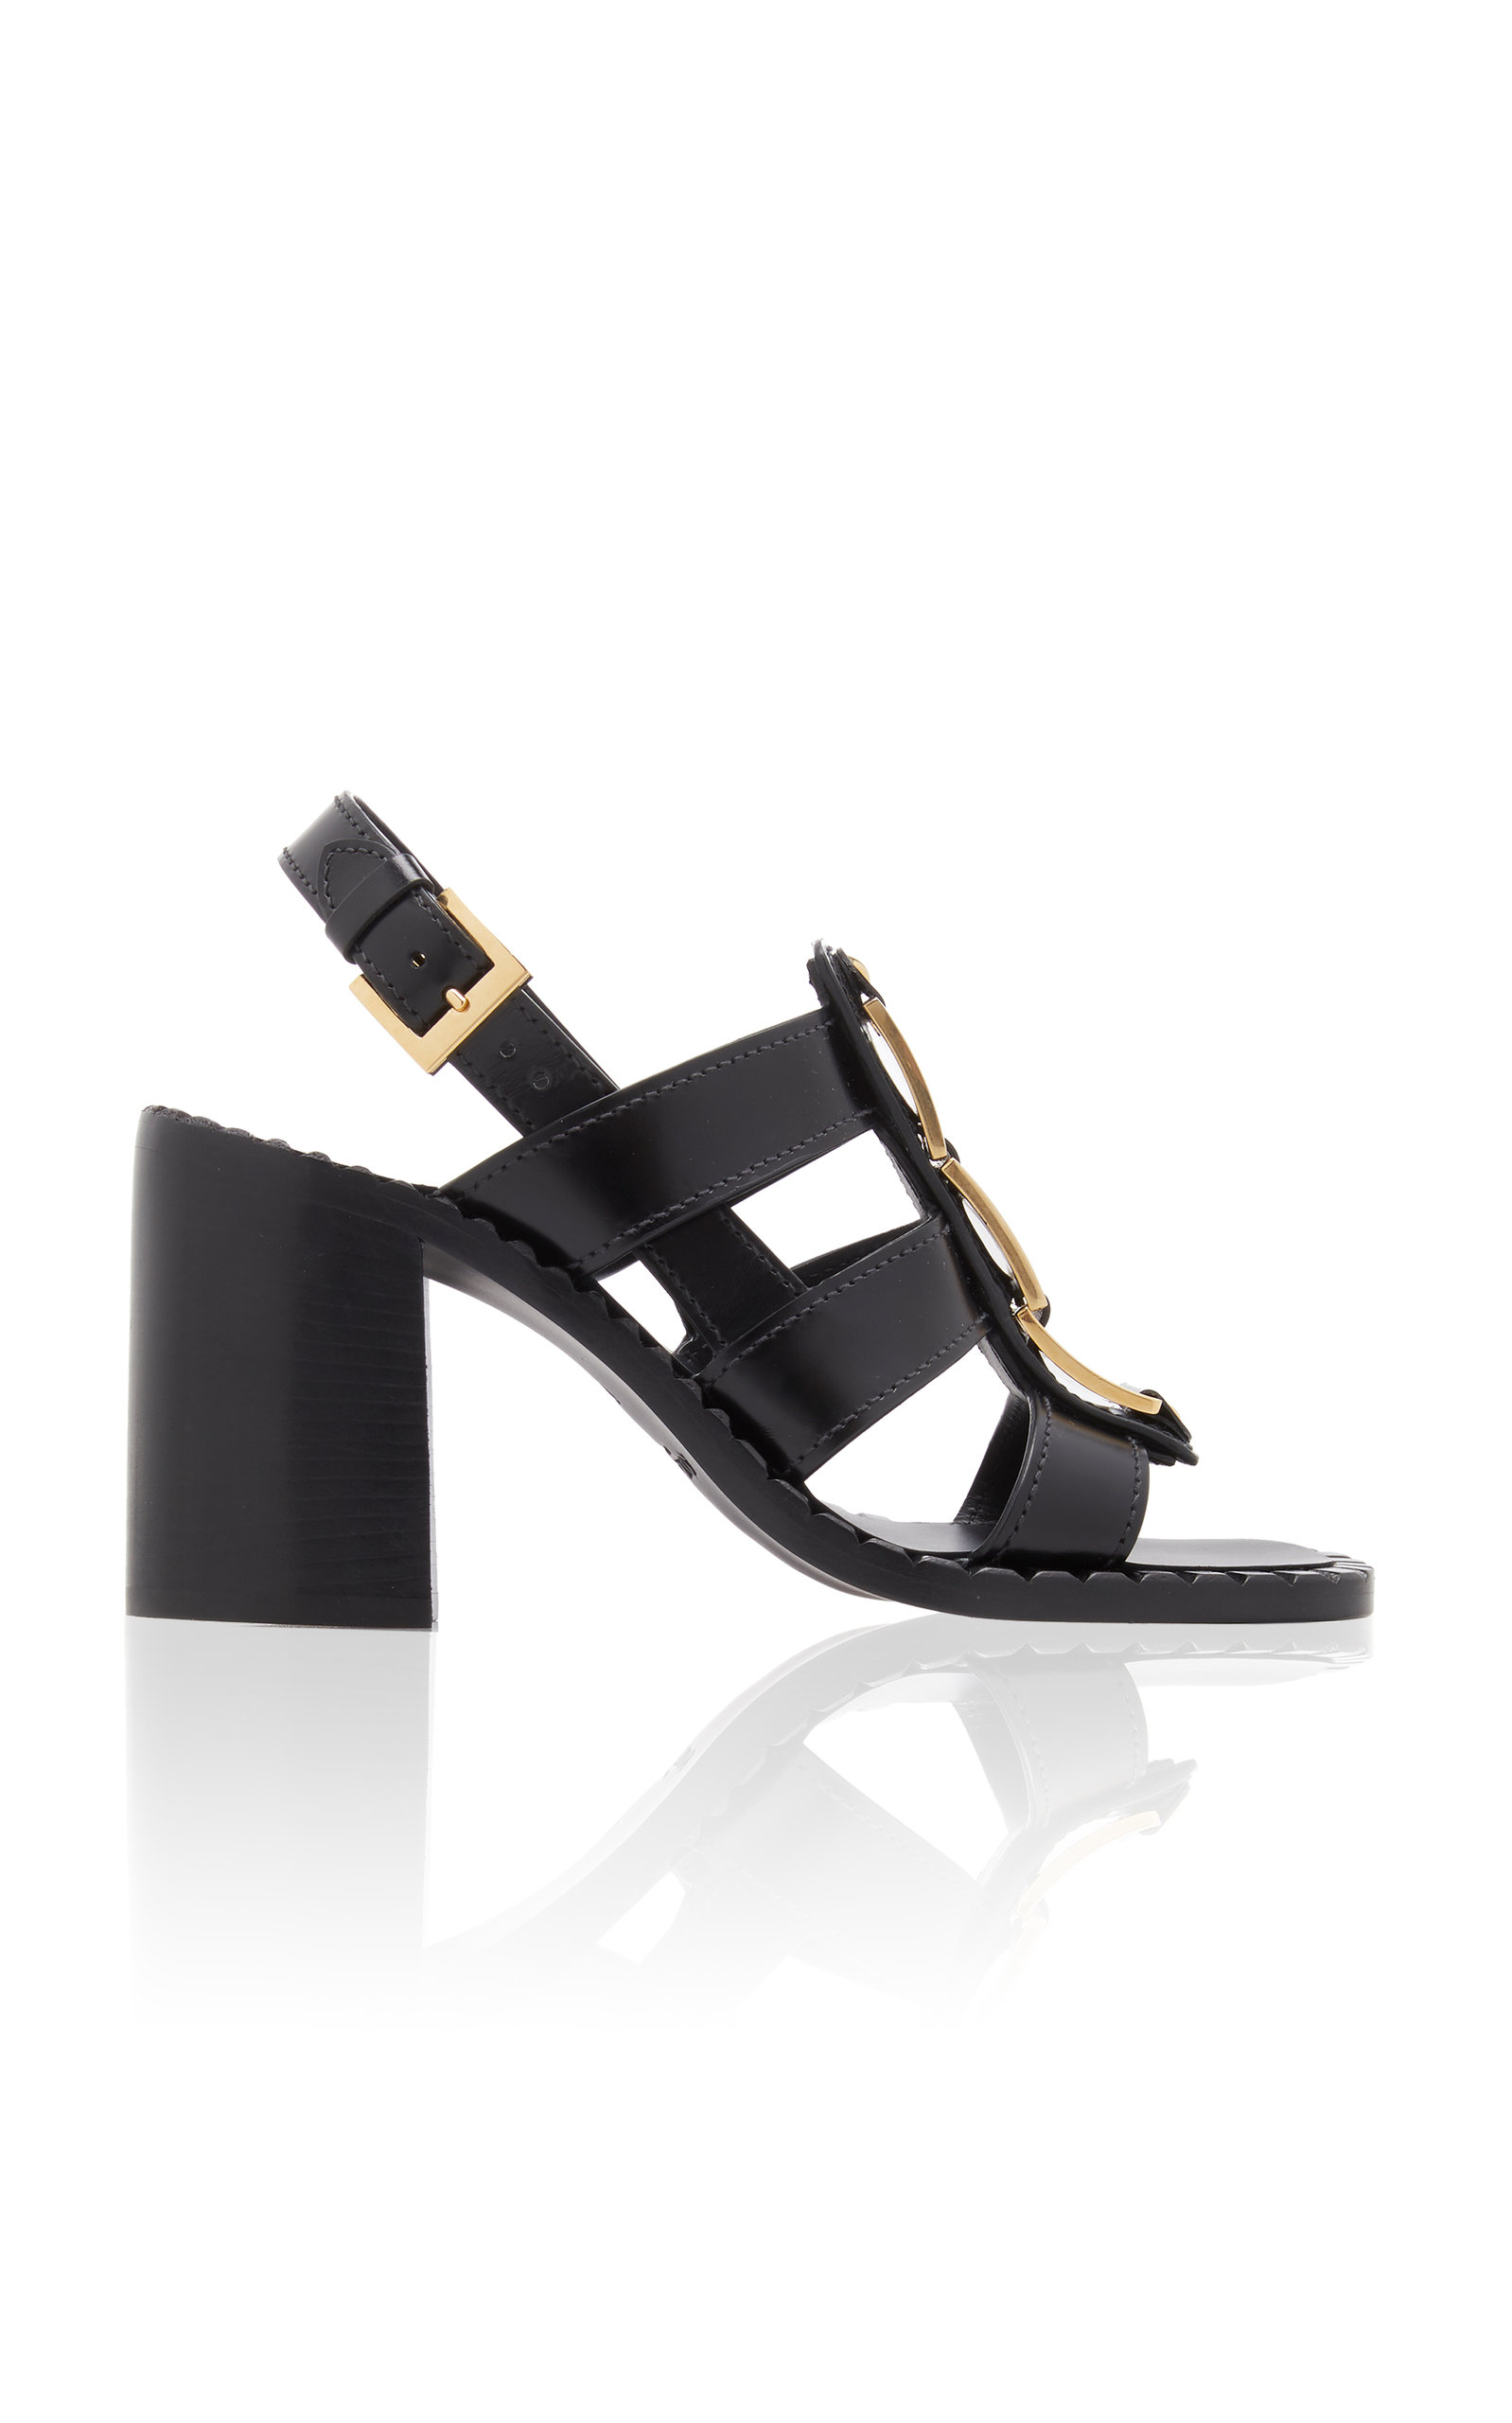 Prada - Embellished Leather Sandals - Black - IT 41 - Moda Operandi